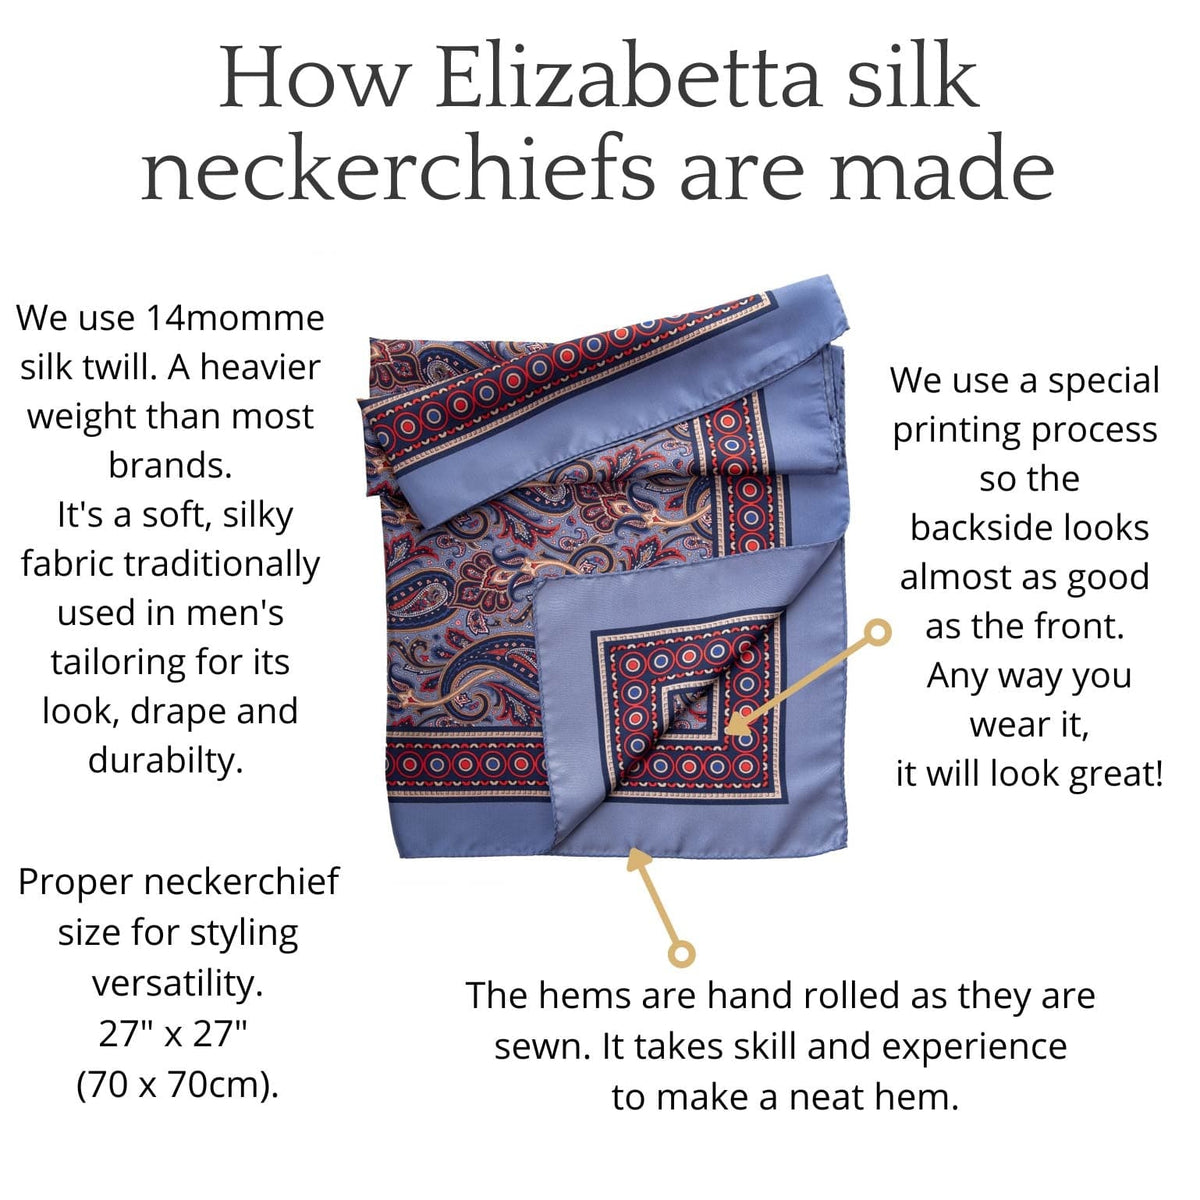 How Elizabetta Italian silk neckerchiefs are made